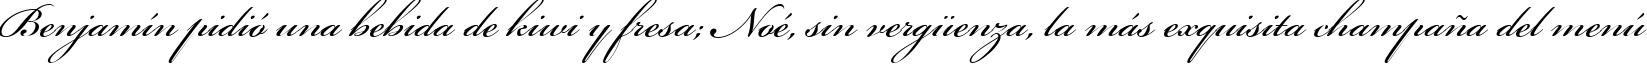 Пример написания шрифтом Bickham Script One текста на испанском